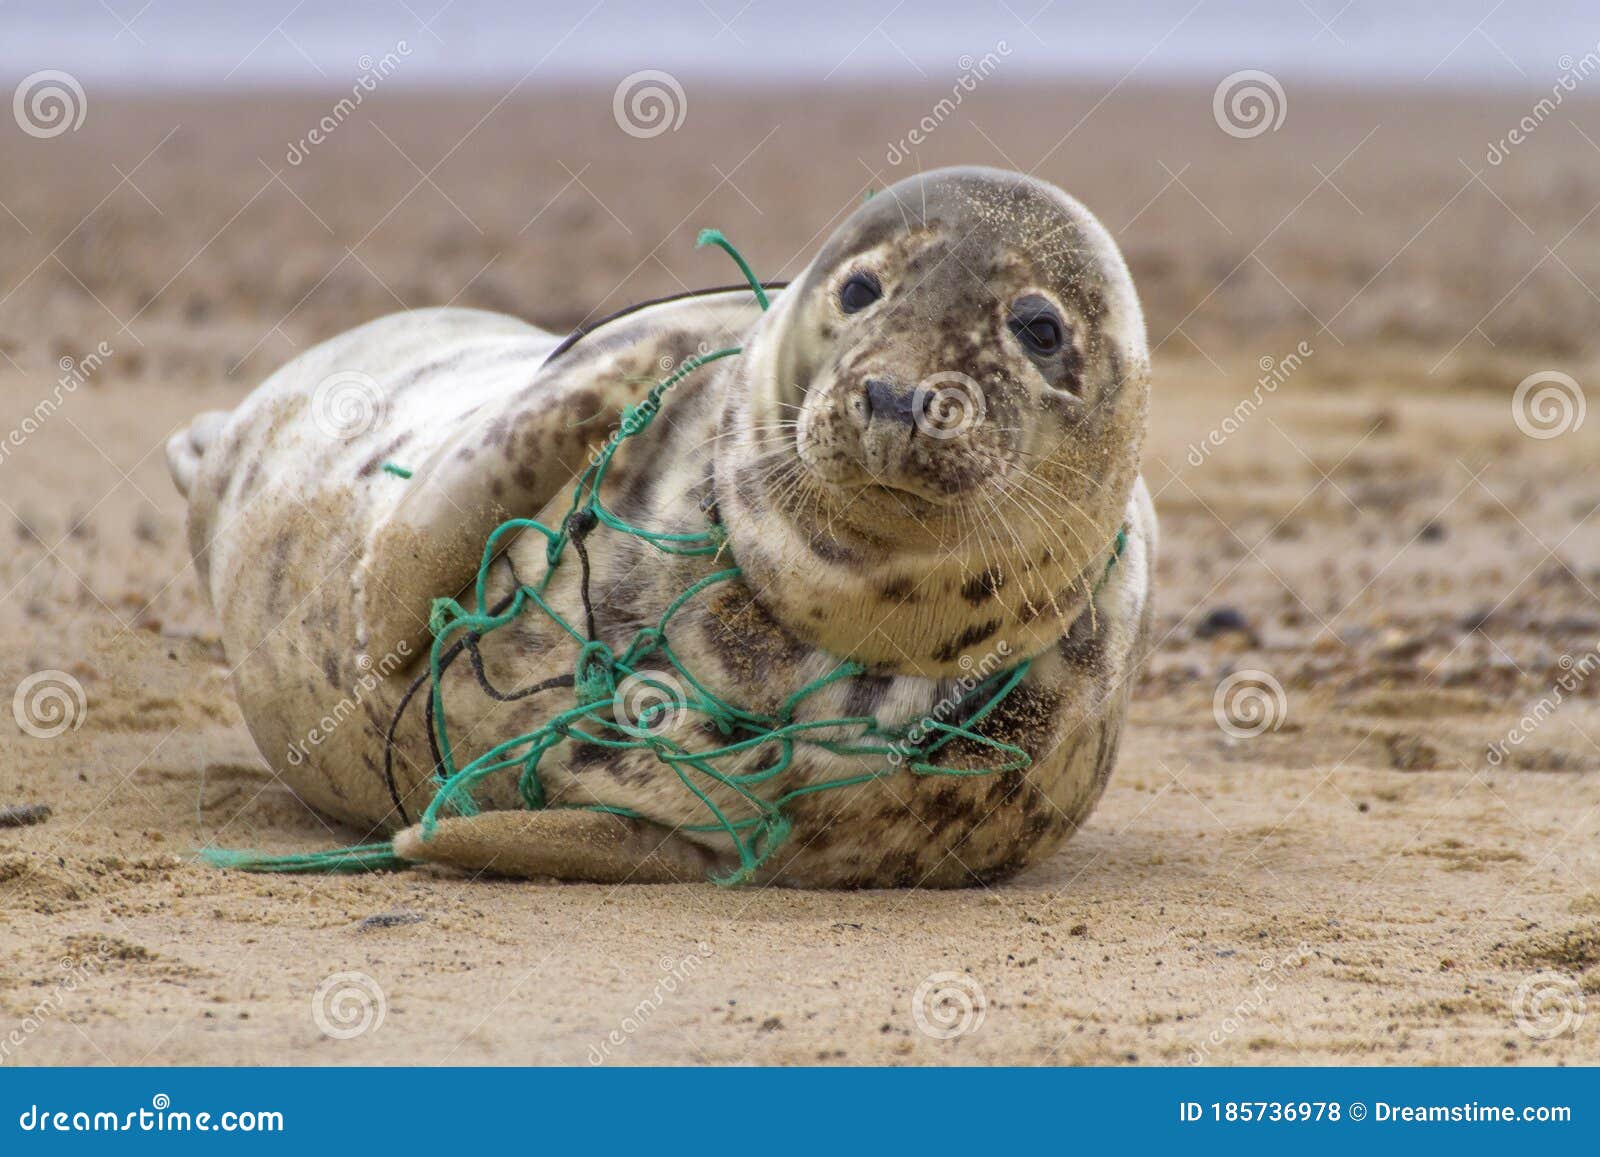 tragic seal caught in net